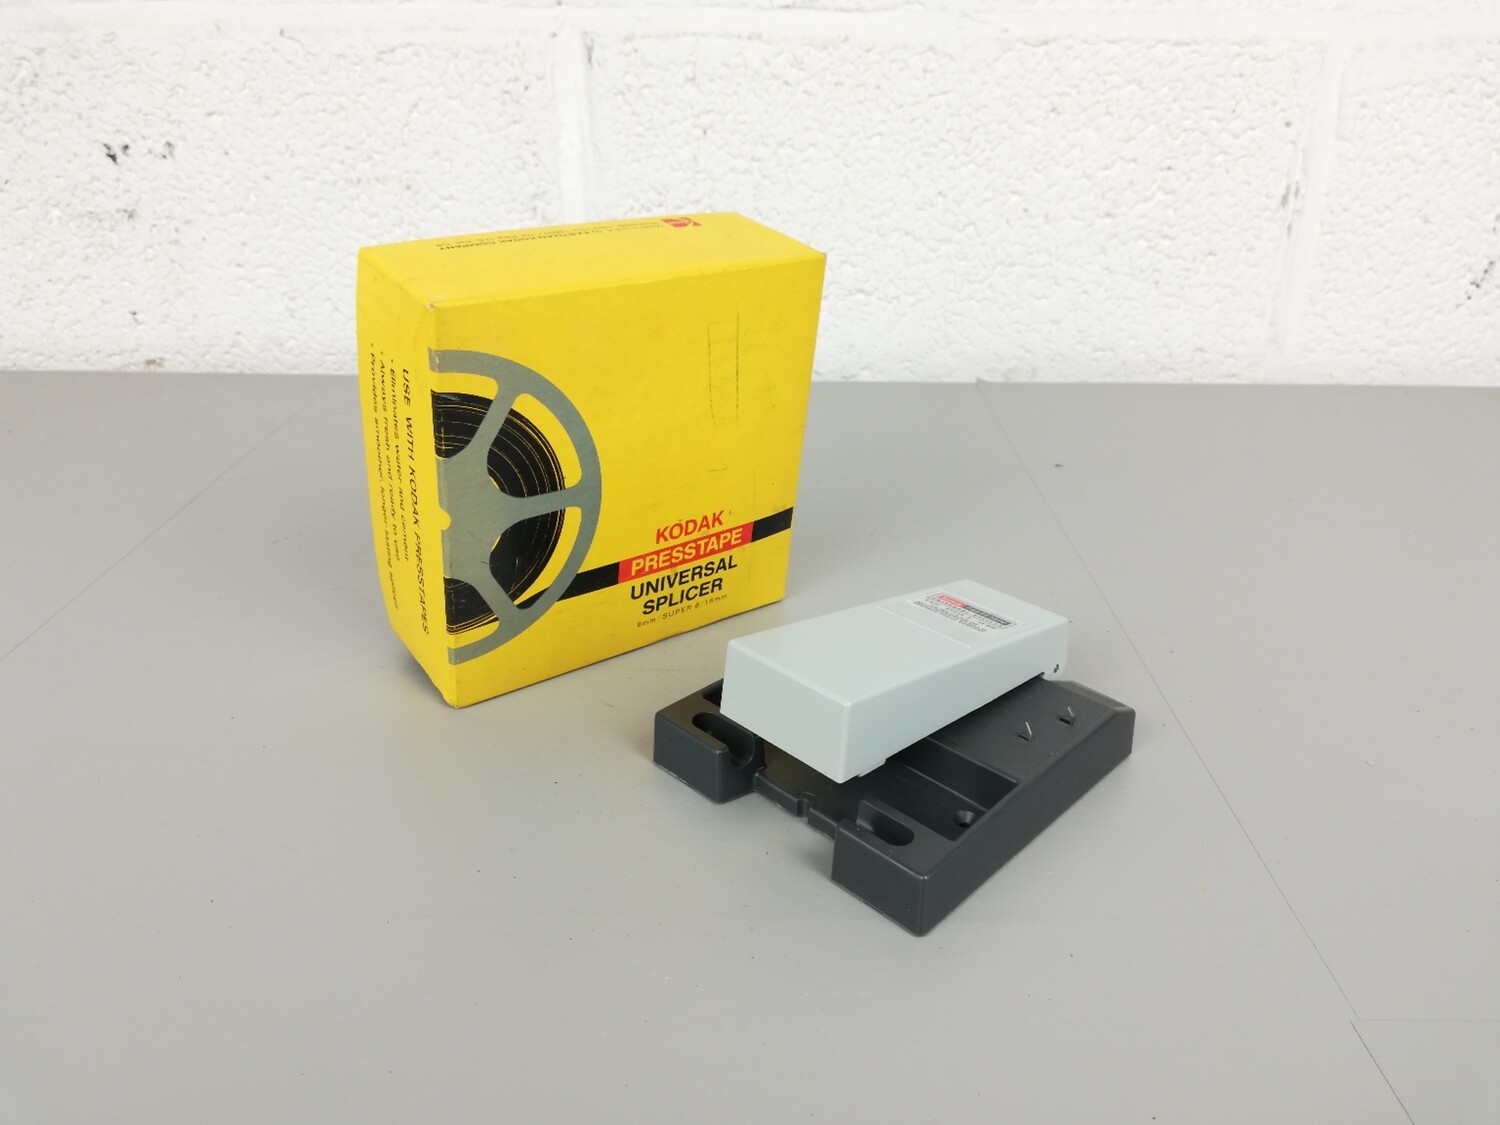 Kodak presstape universal splicer